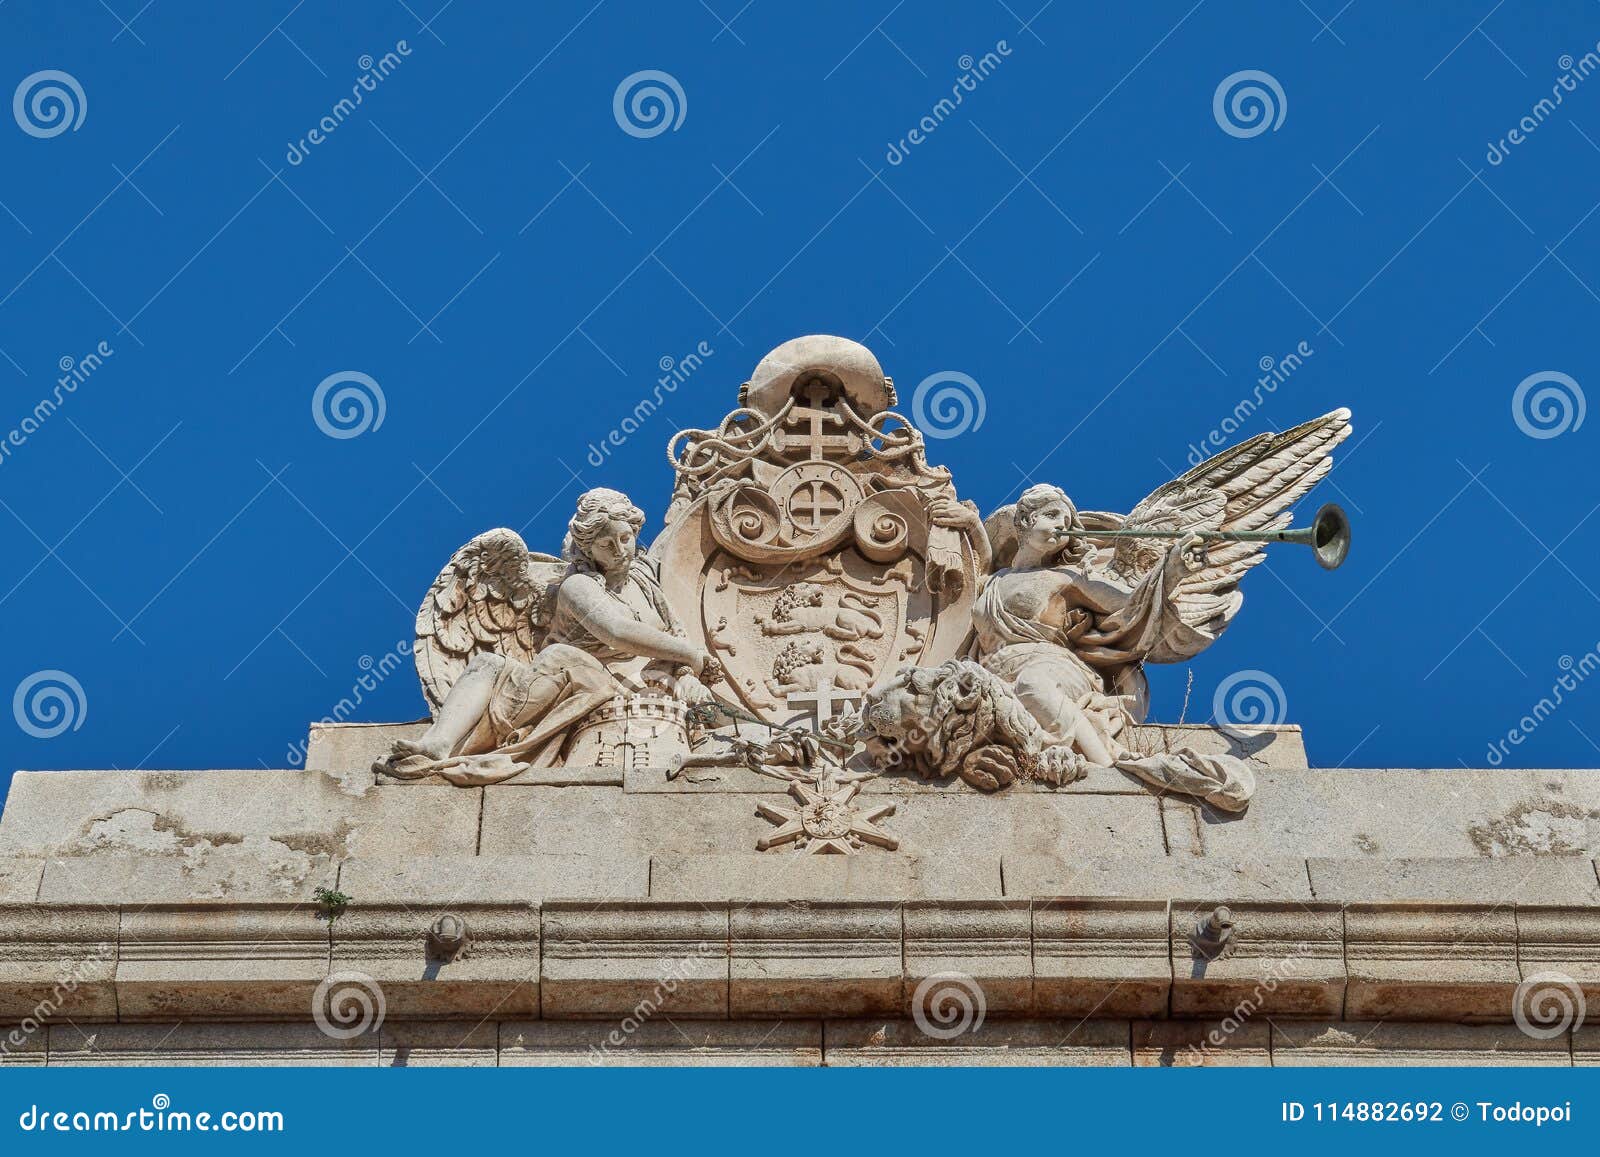 figures of winged women of the lorenzana university palace in toledo, spain